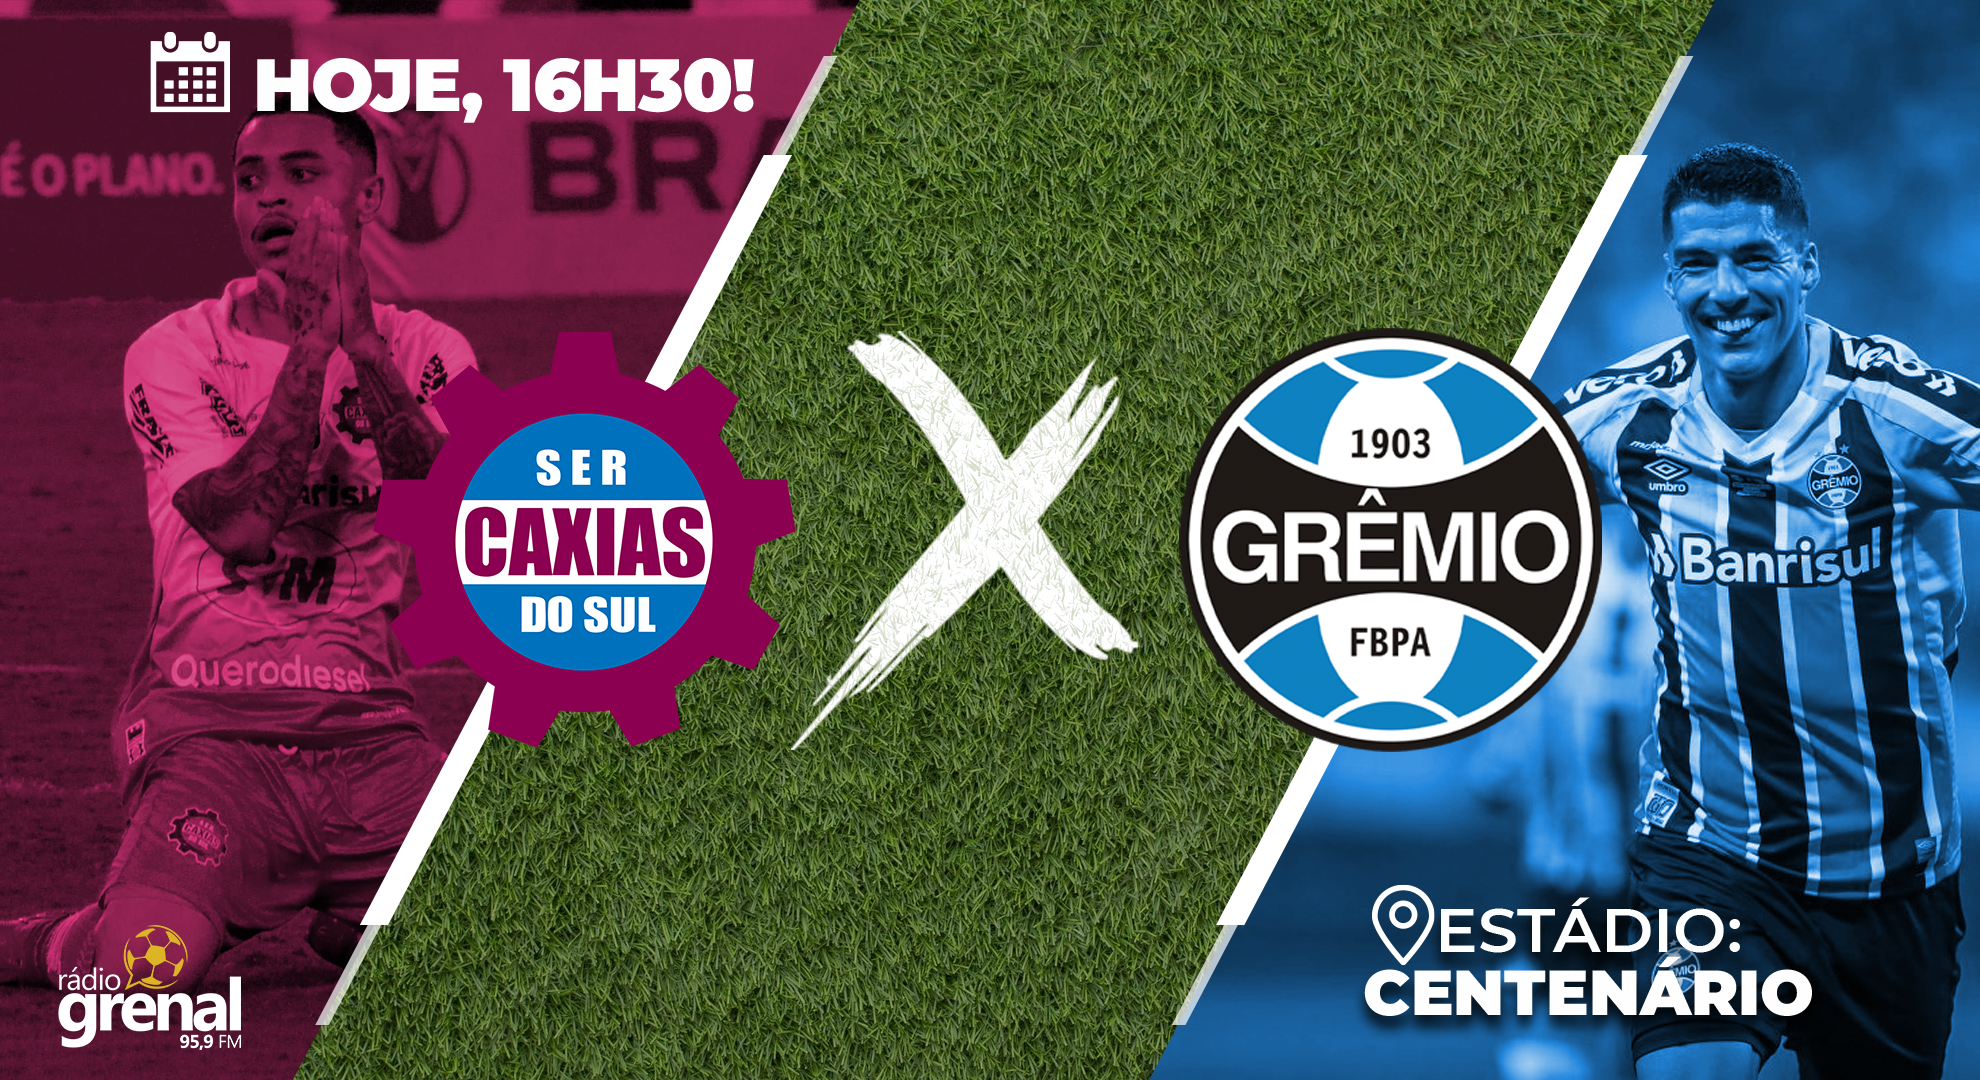 Match Preview: Sao Paulo FC vs. America MG